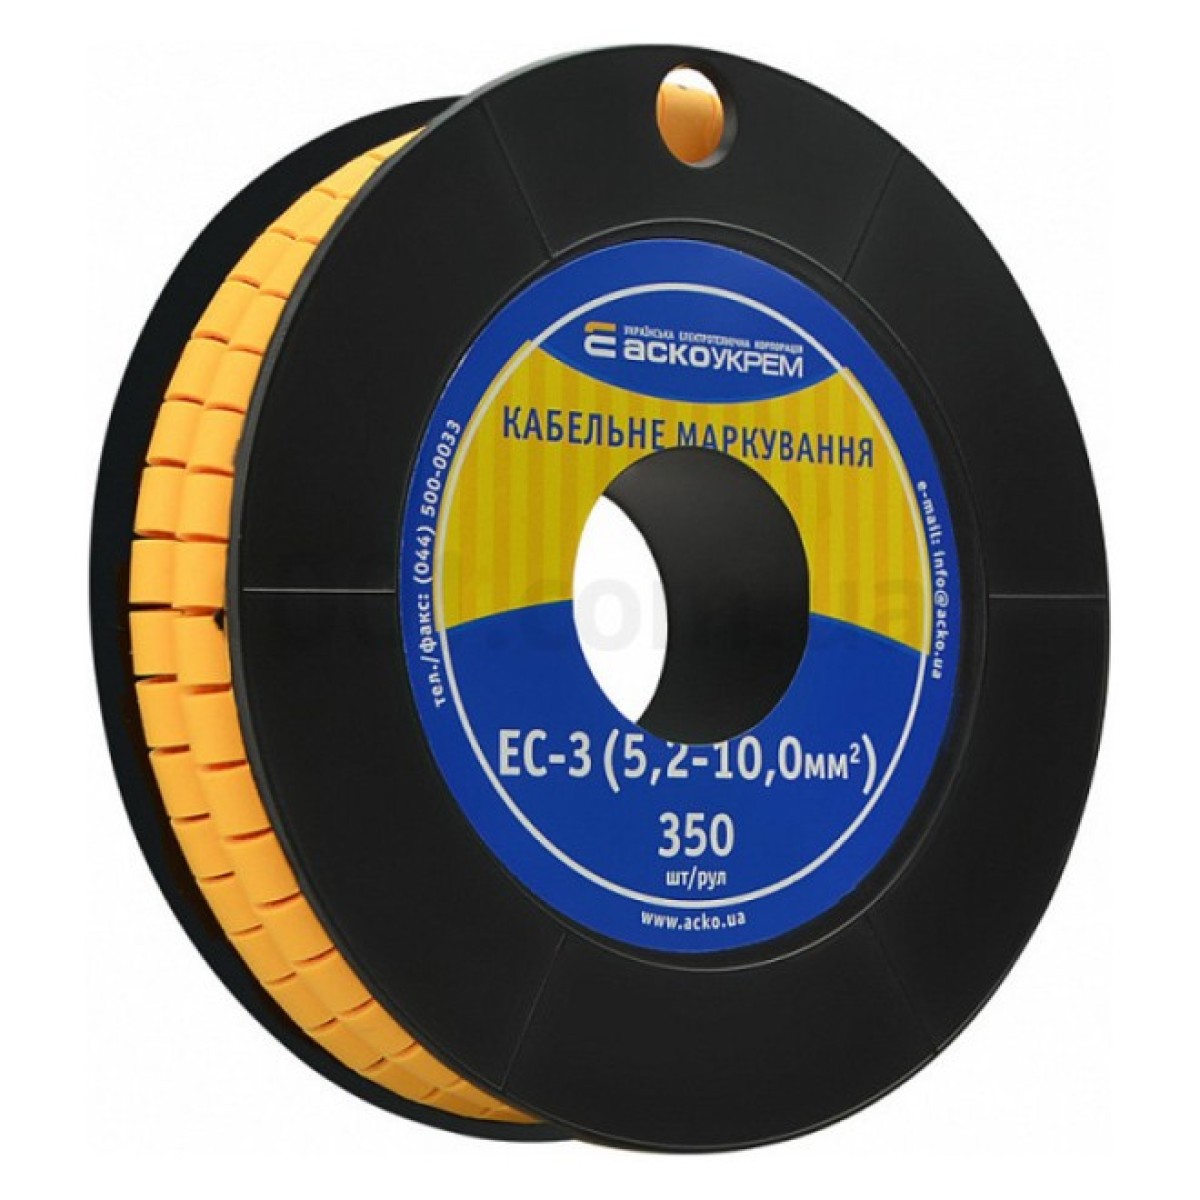 Маркировка EC-3 для кабеля 5,2-10,0 мм² (чистая) (рулон 250 шт.), АСКО-УКРЕМ 98_98.jpg - фото 1